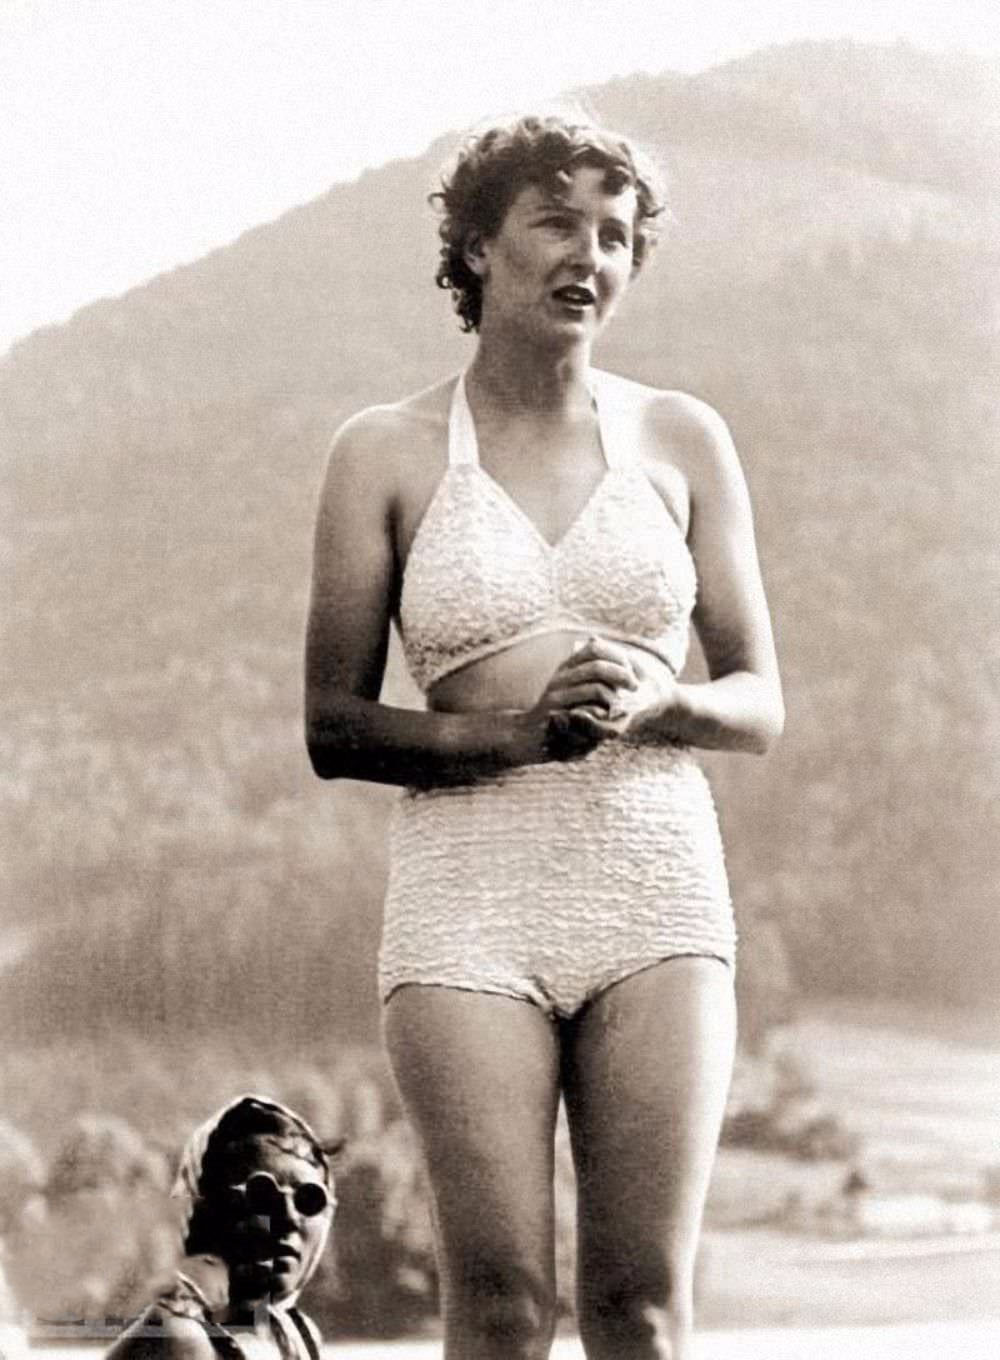 Braun in her bathing suit near Berchtesgaden, Germany, 1940.